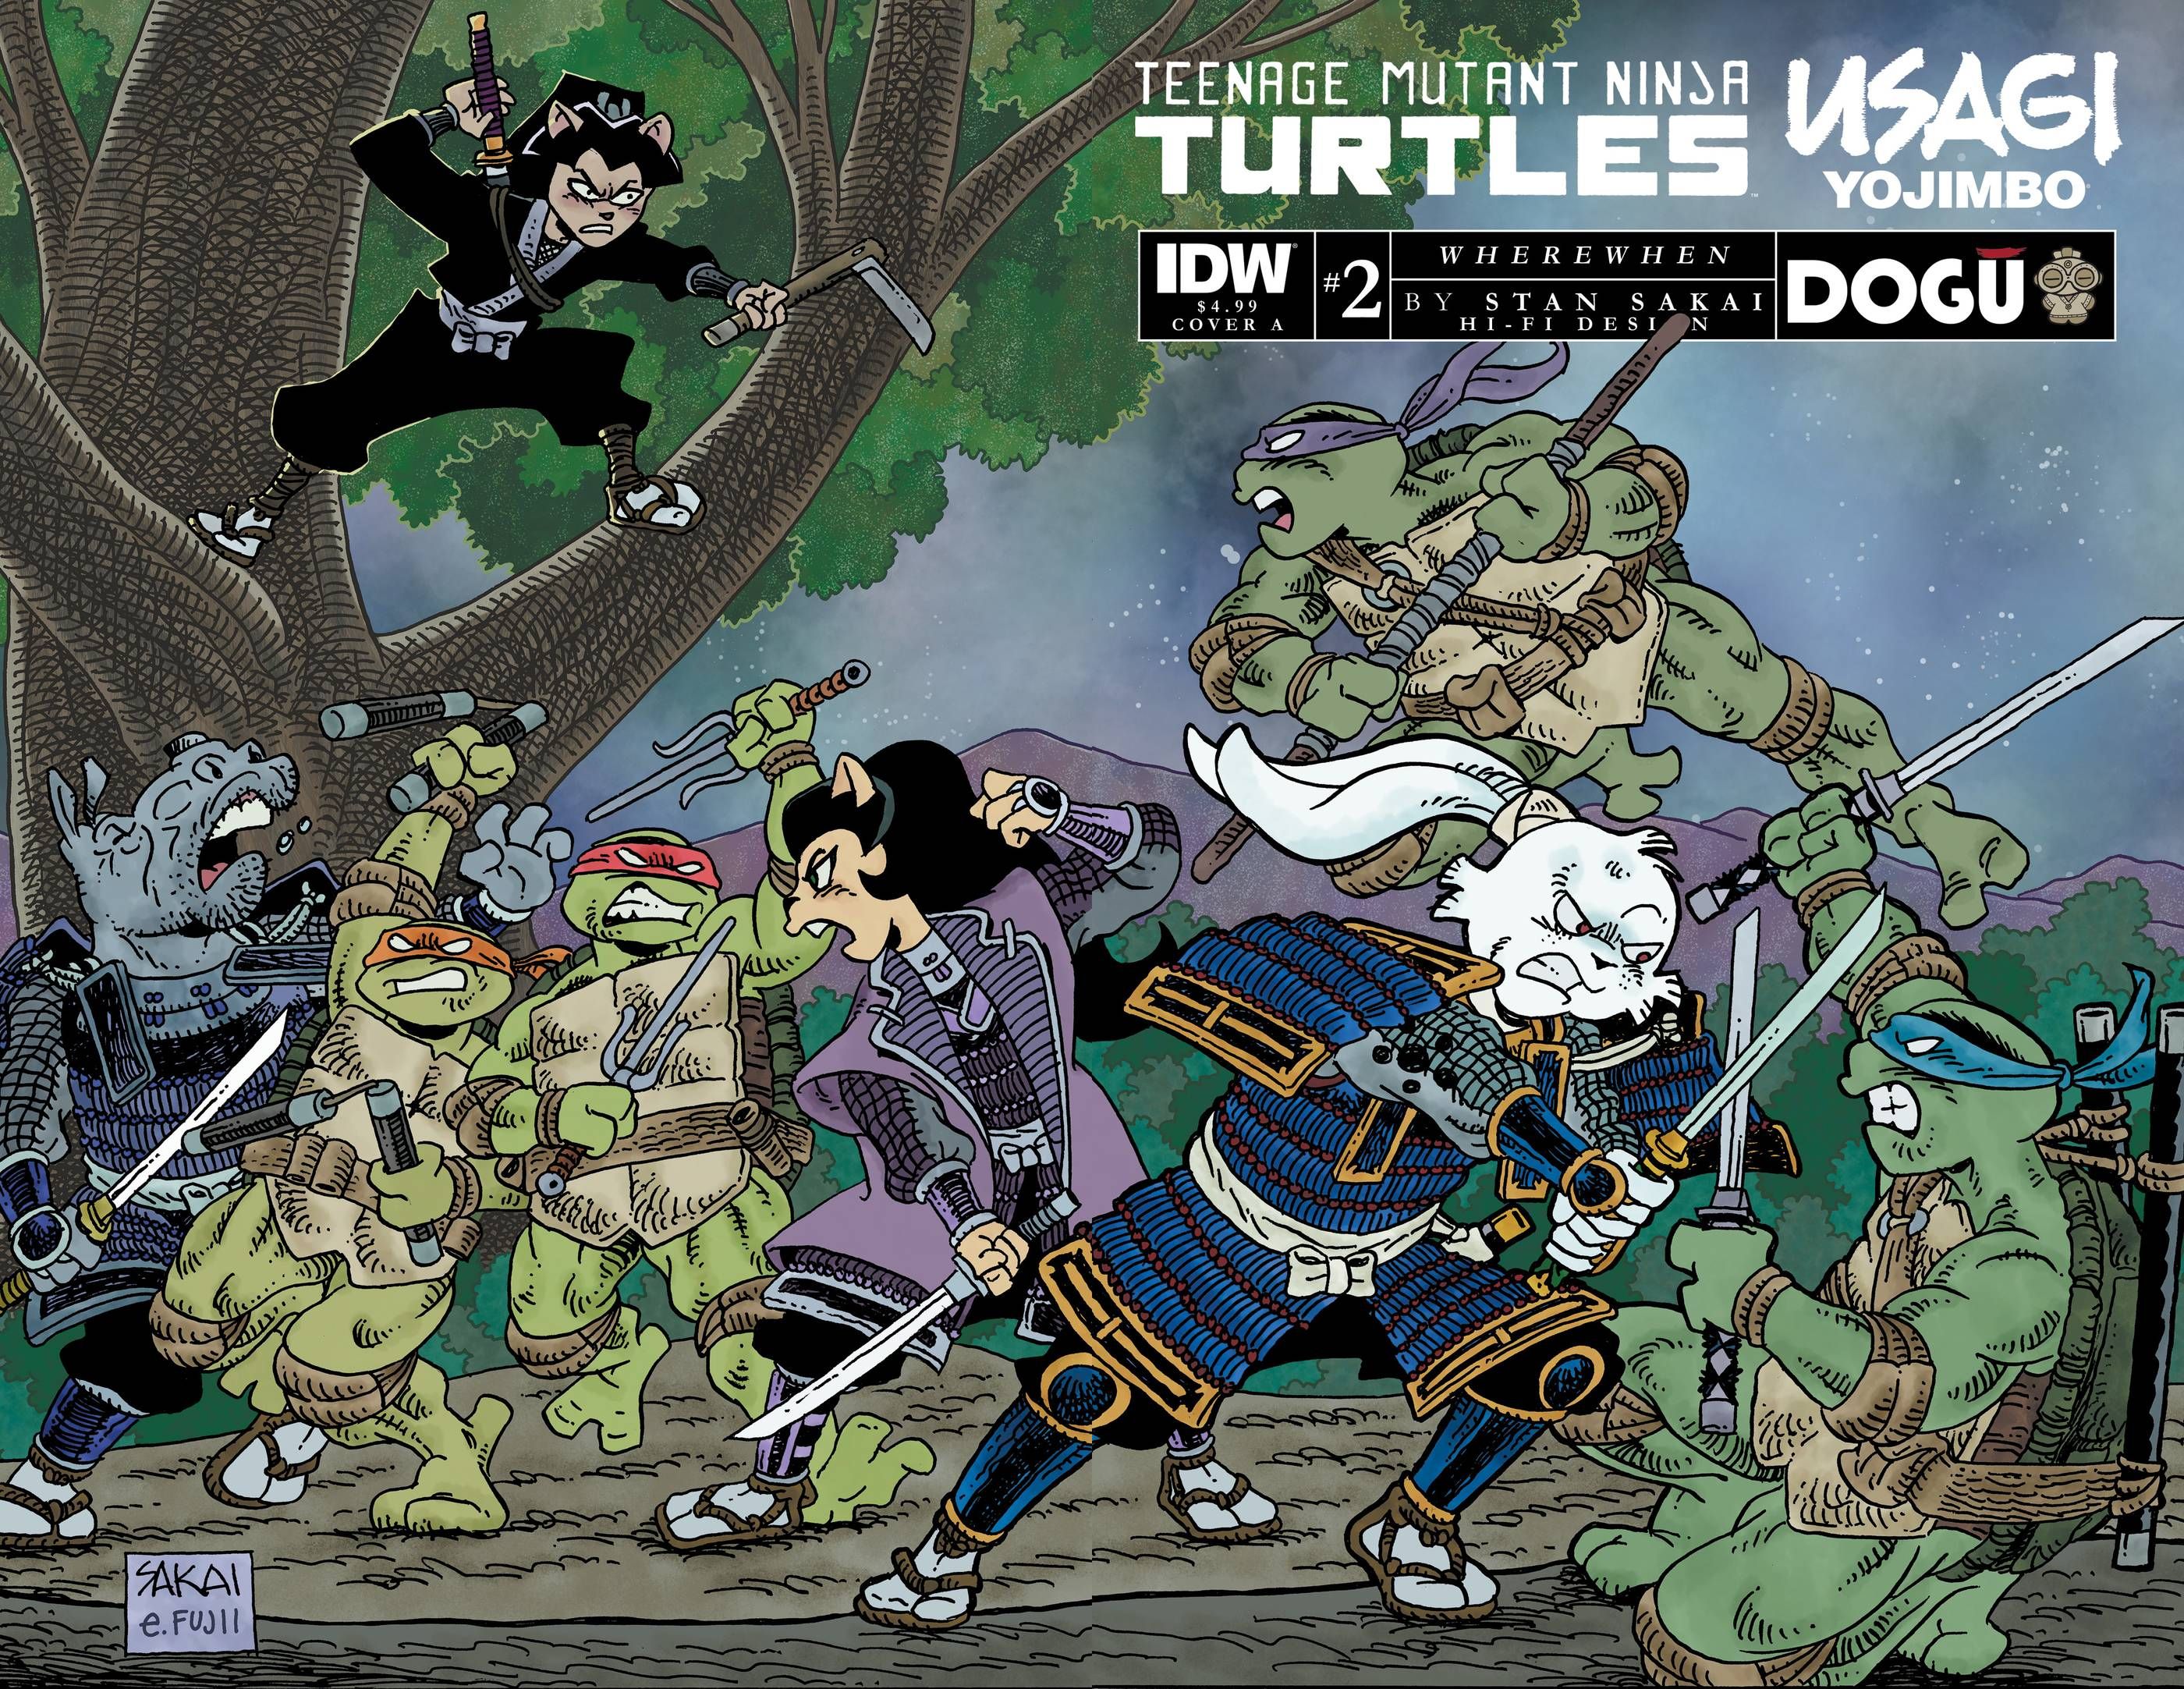 Teenage Mutant Ninja Turtles / Usagi Yojimbo: WhereWhen #2 Comic